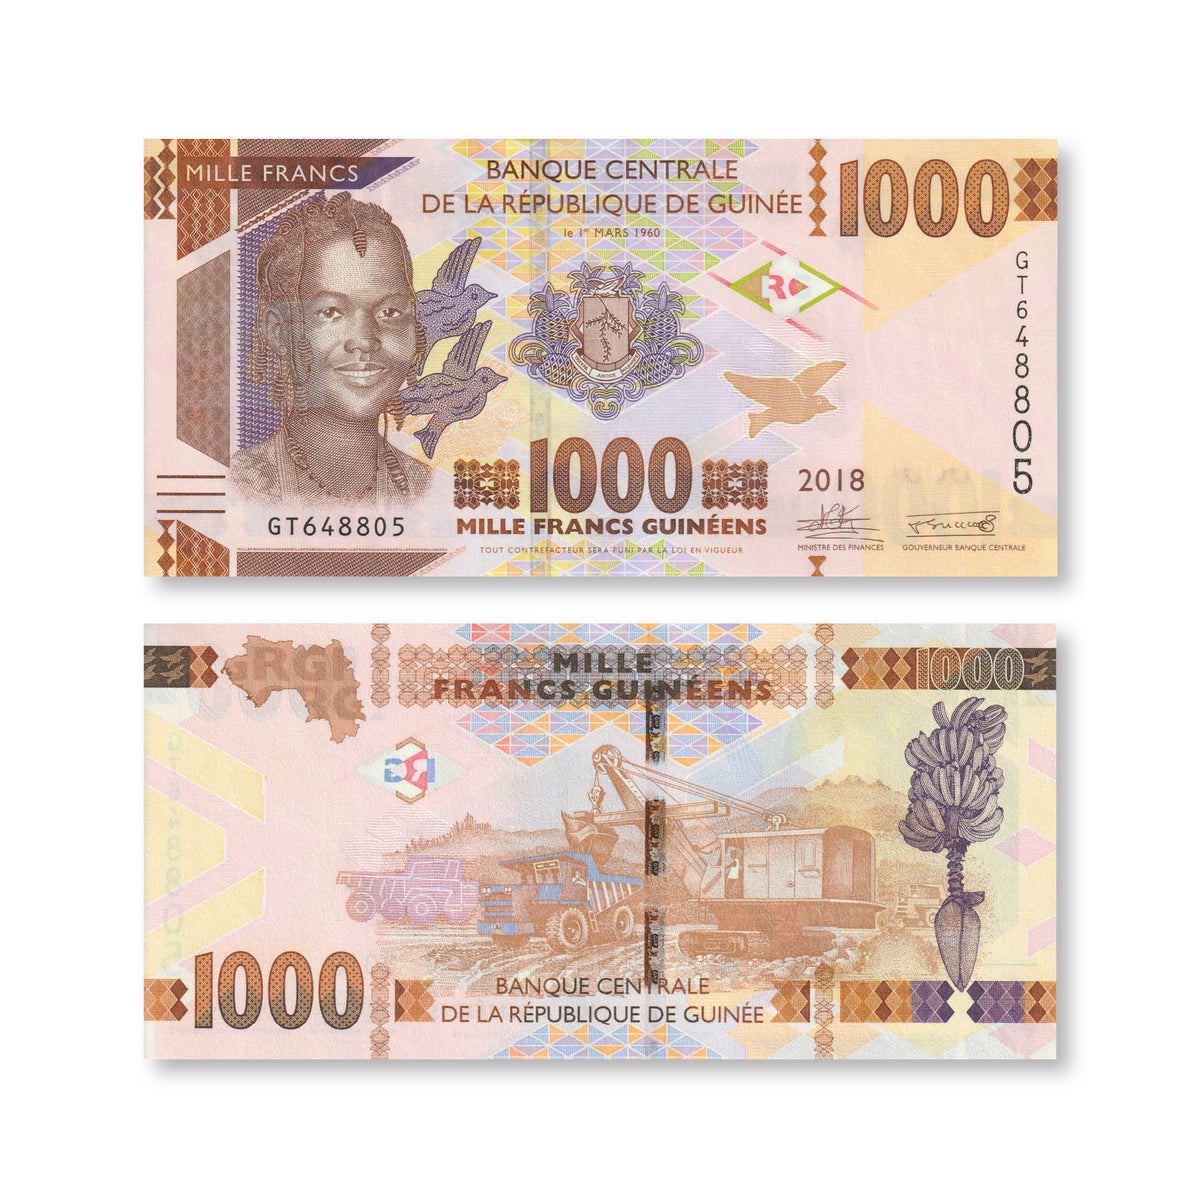 Guinea 1000 Francs, 2018, B339c, P48, UNC - Robert's World Money - World Banknotes